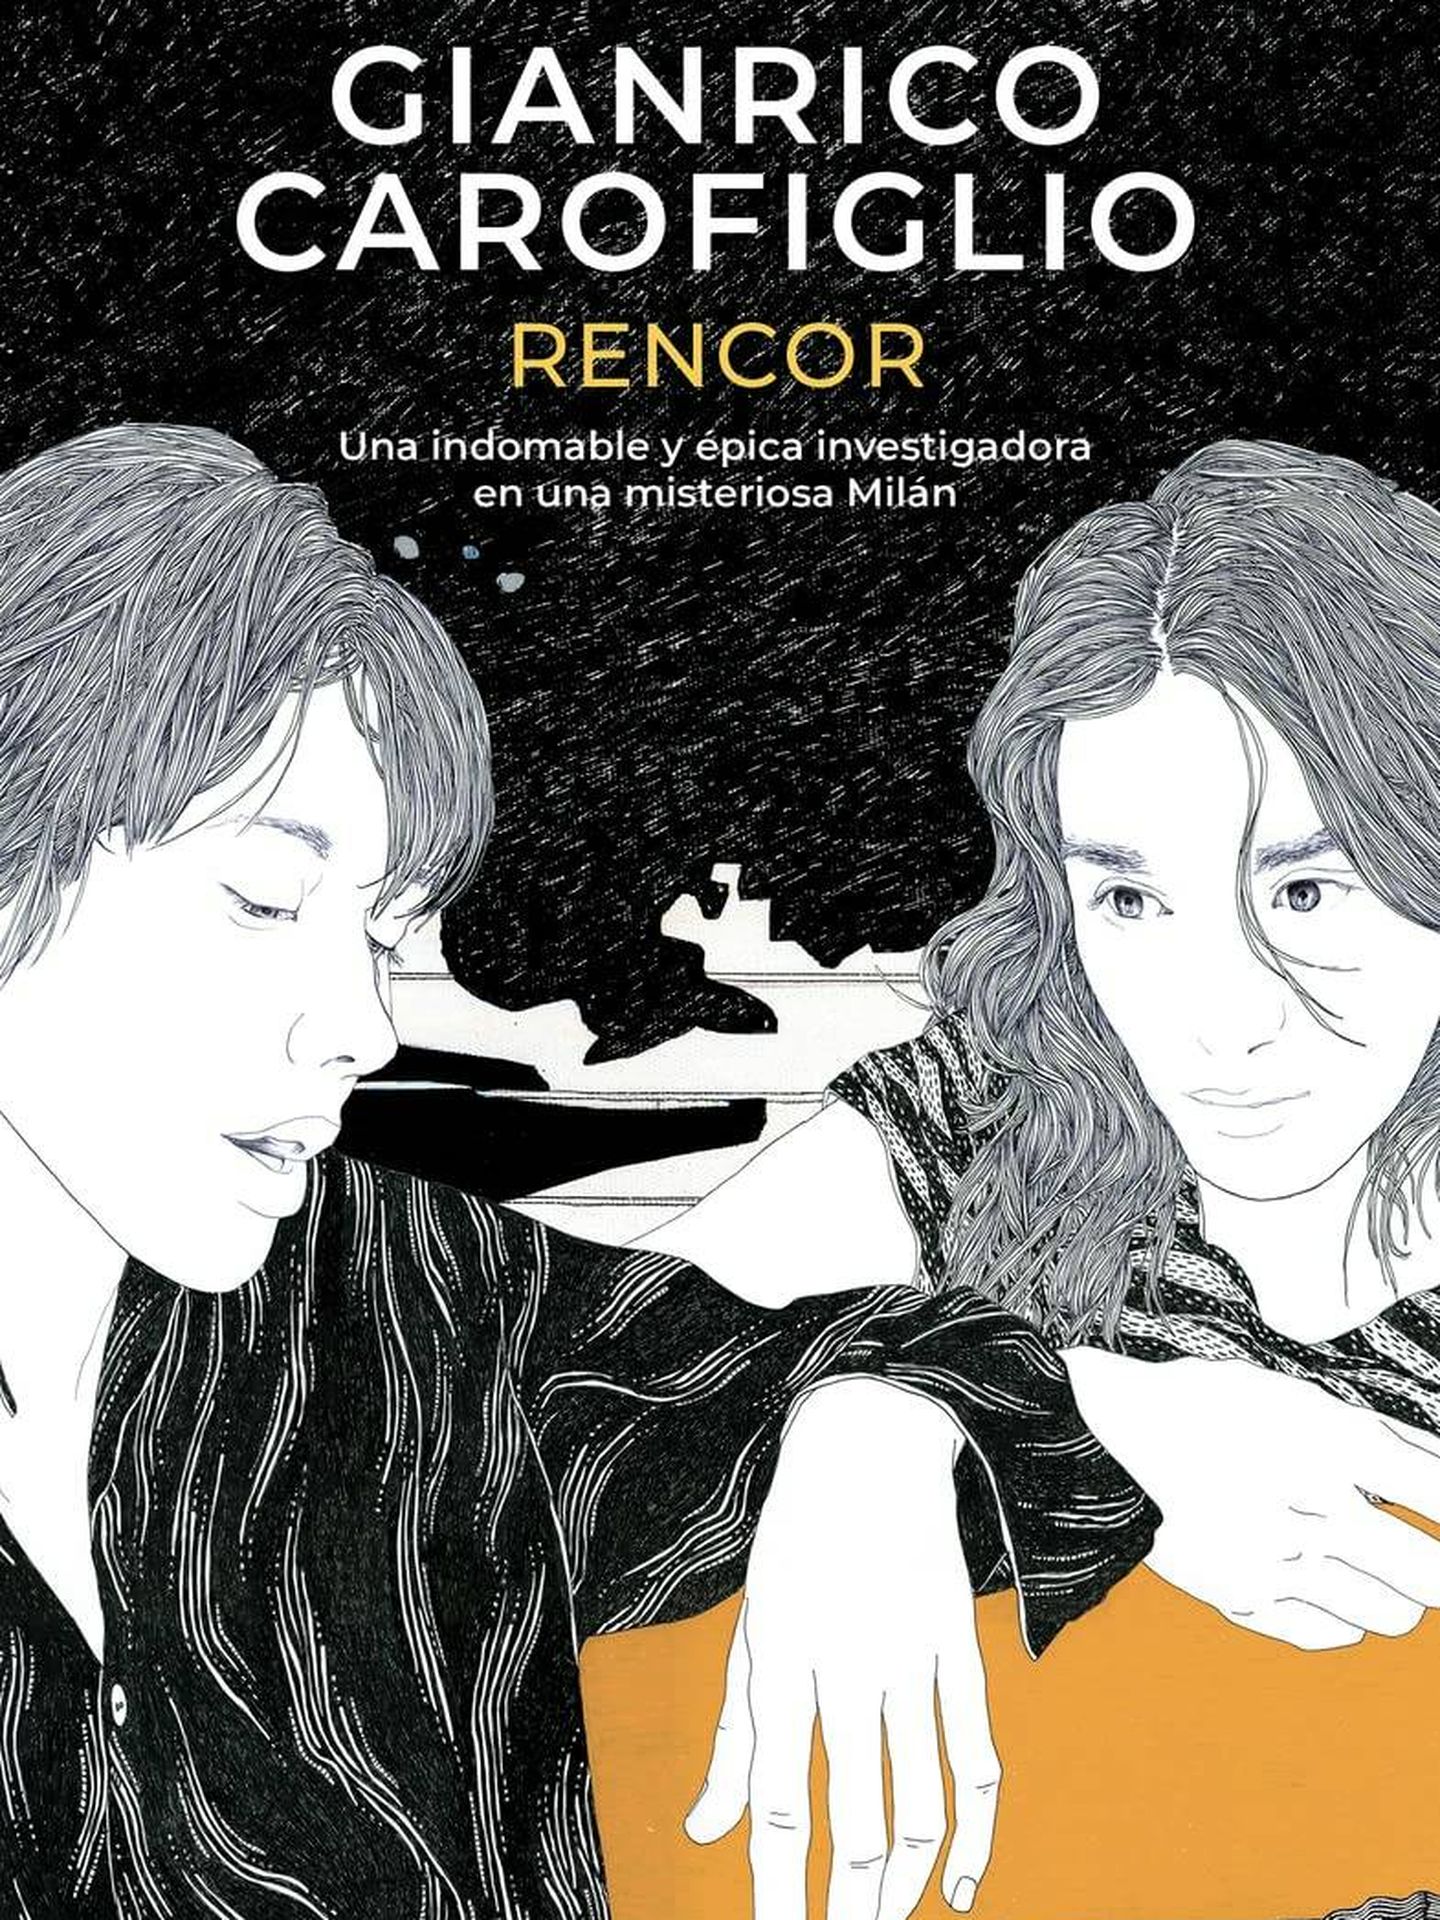 Portada de 'Rencor', la nueva novela de Gianrico Carofiglio, la segunda protagonizada por la exfiscal Penelope Spada.